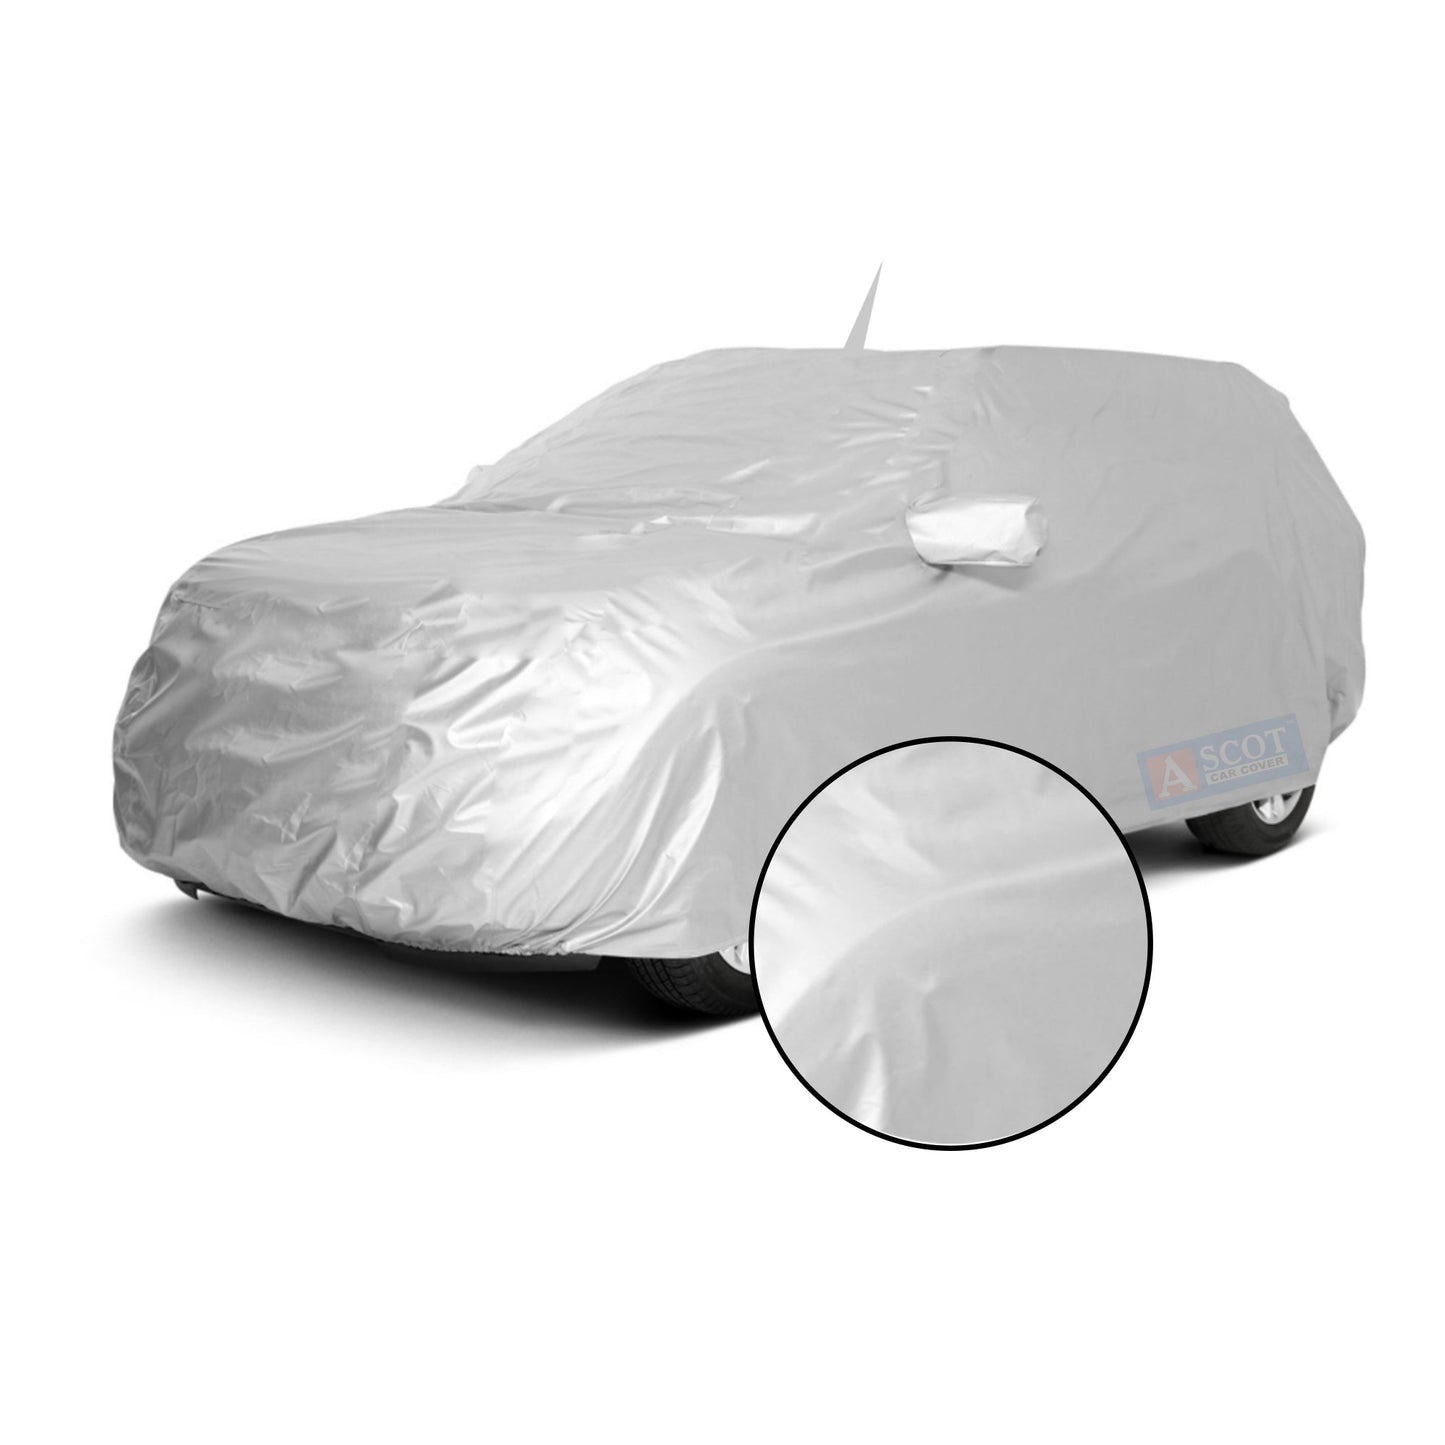 Ascot Maruti Suzuki Wagonr Car Body Cover 2019-2023 Model Dust Proof, Trippel Stitched